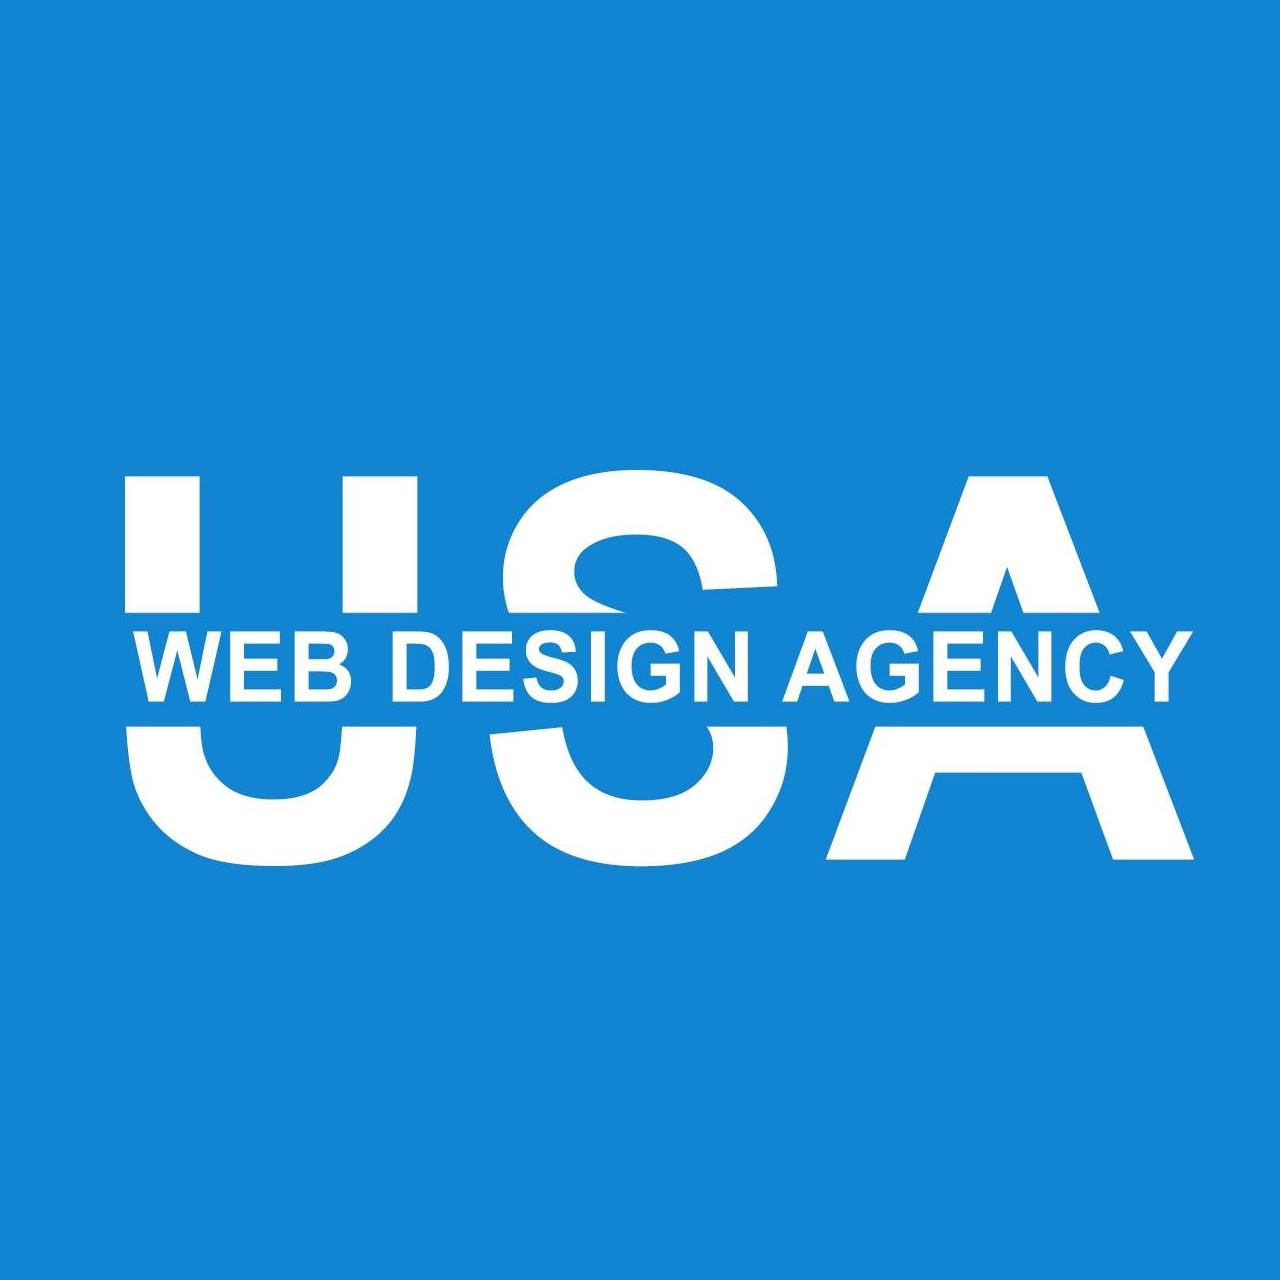 Web Design Agency USA logo